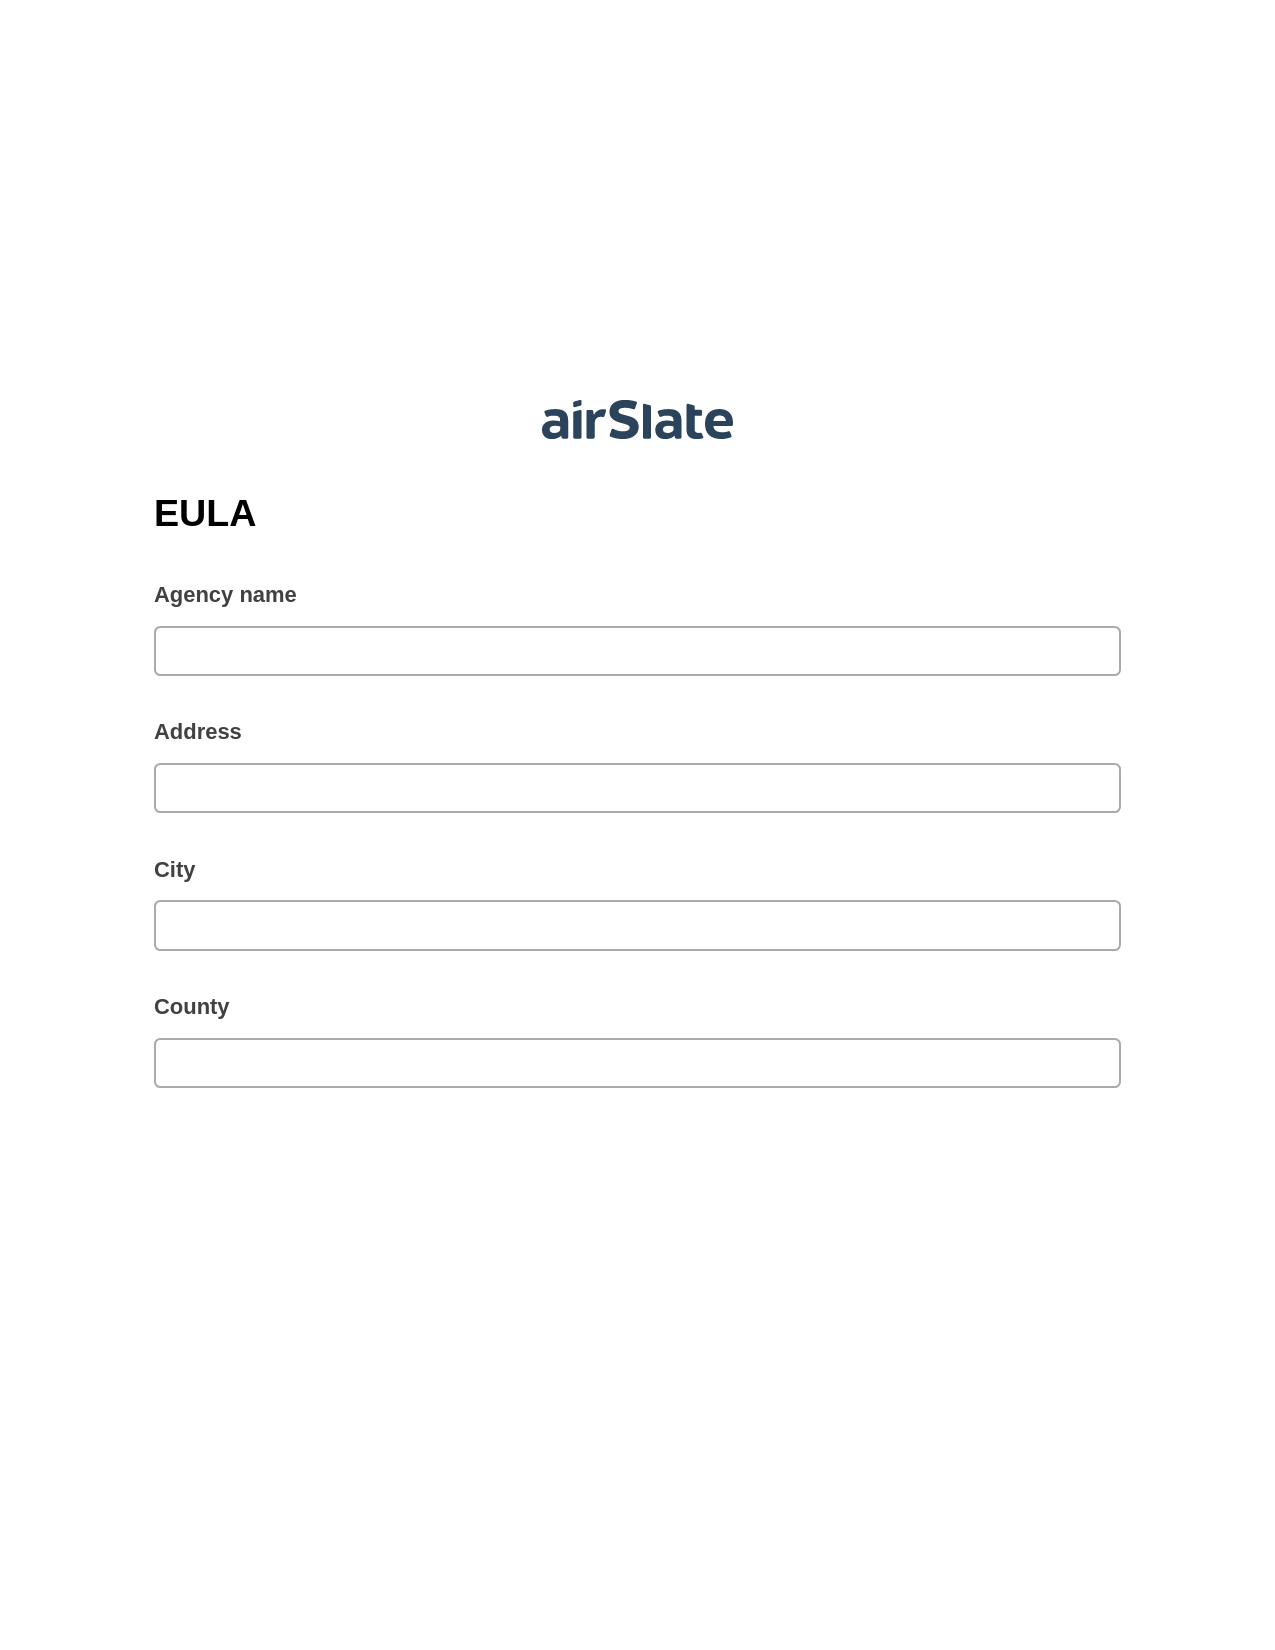 EULA Pre-fill from NetSuite Records Bot, Webhook Bot, Dropbox Bot